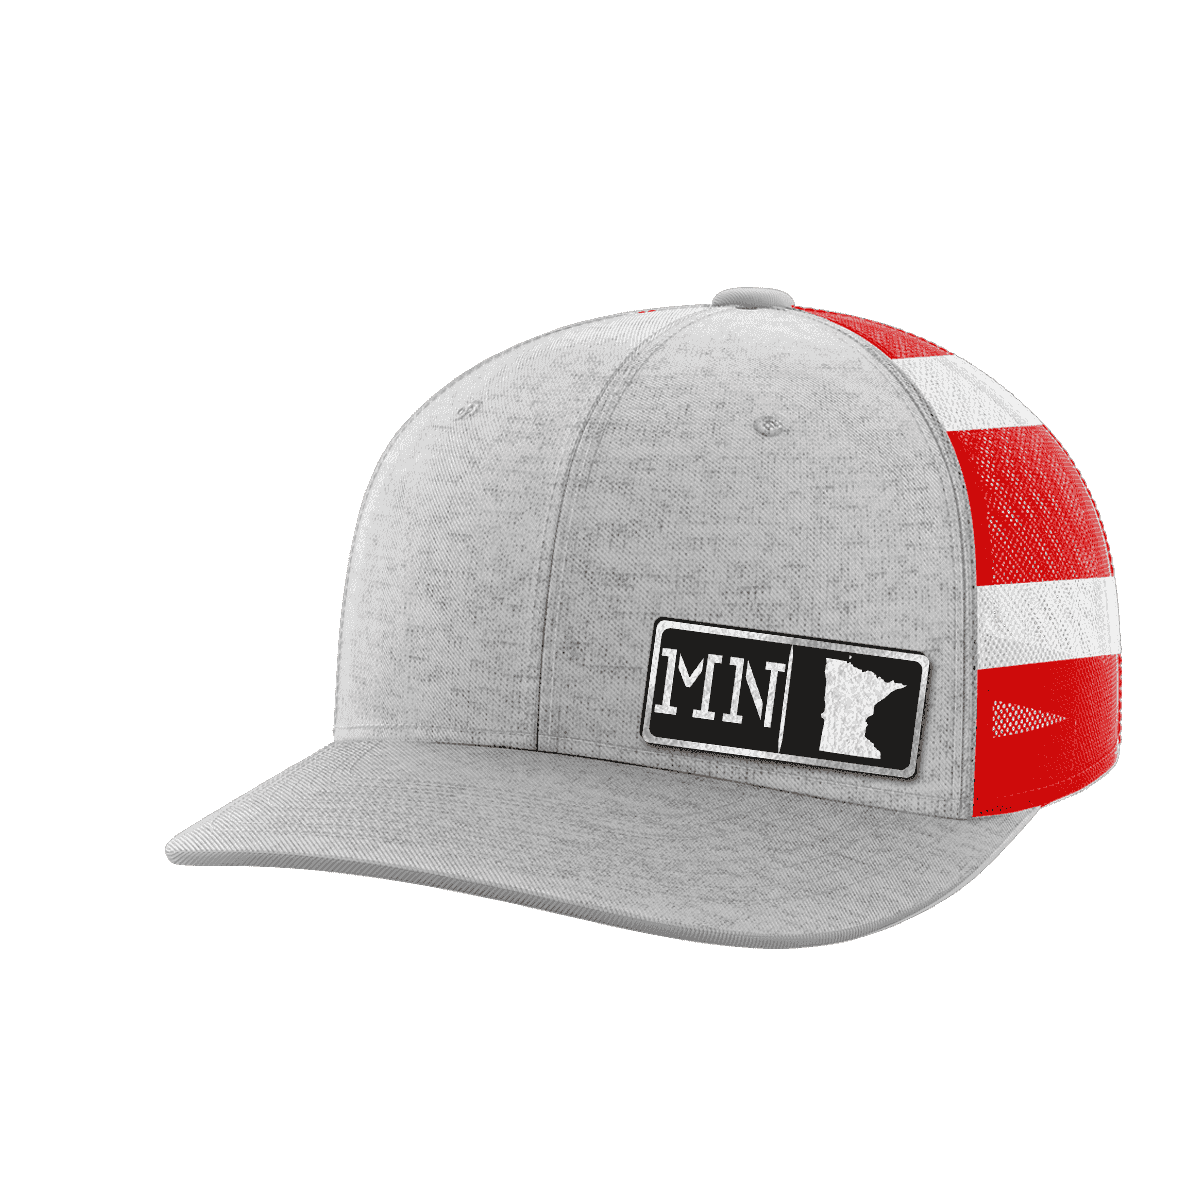 Thumbnail for Minnesota Homegrown Hats - Greater Half